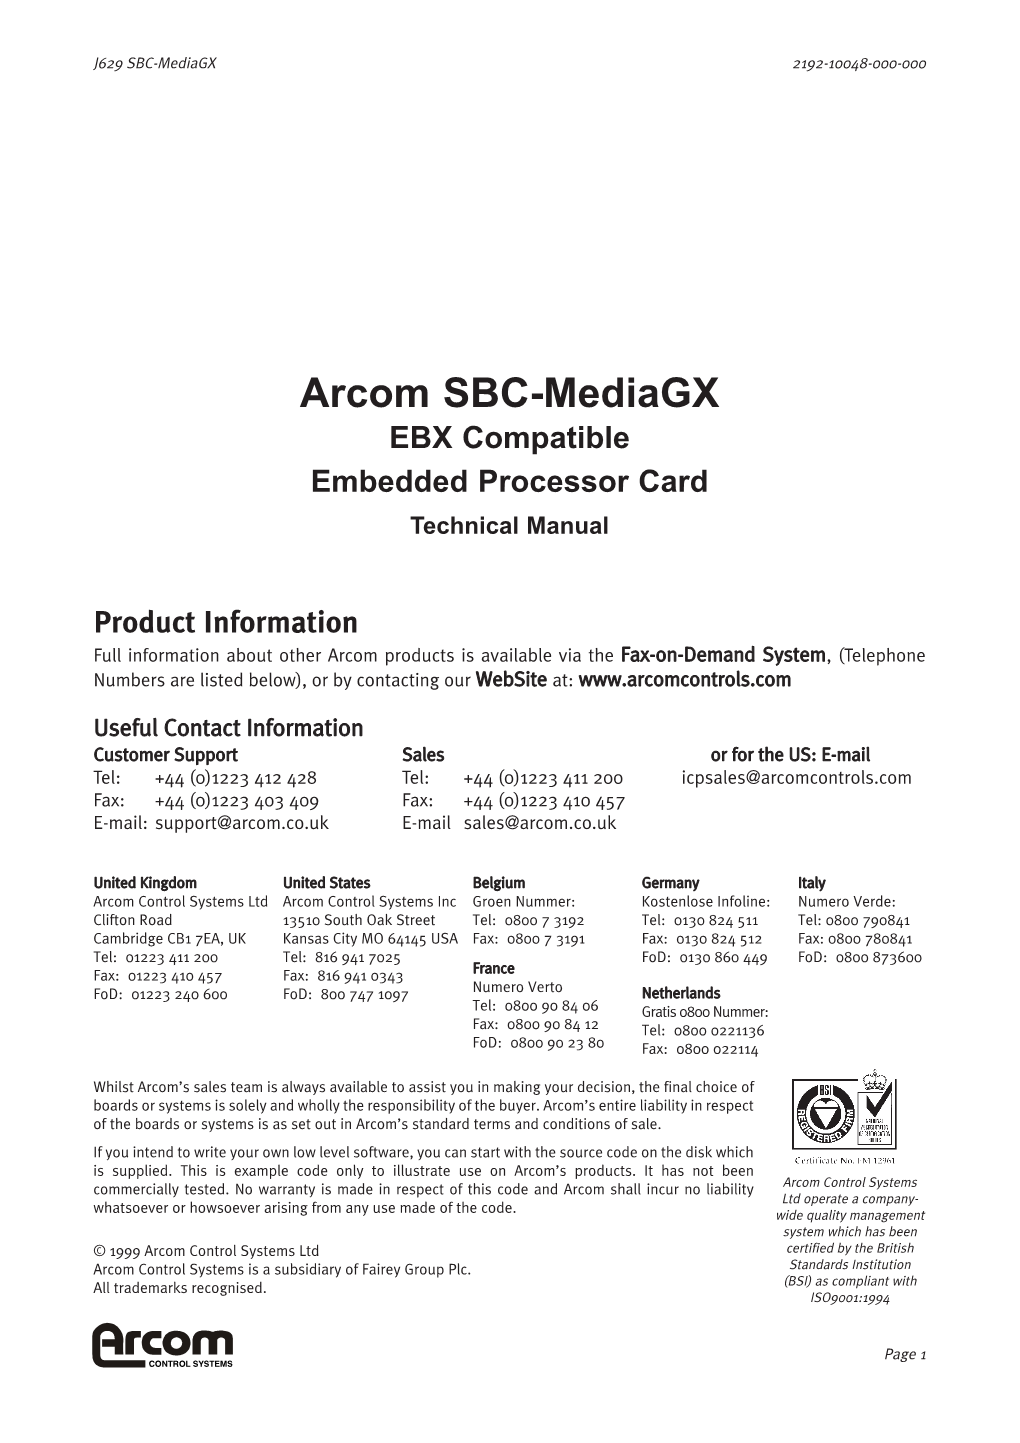 Arcom SBC-Mediagx EBX Compatible Embedded Processor Card Technical Manual